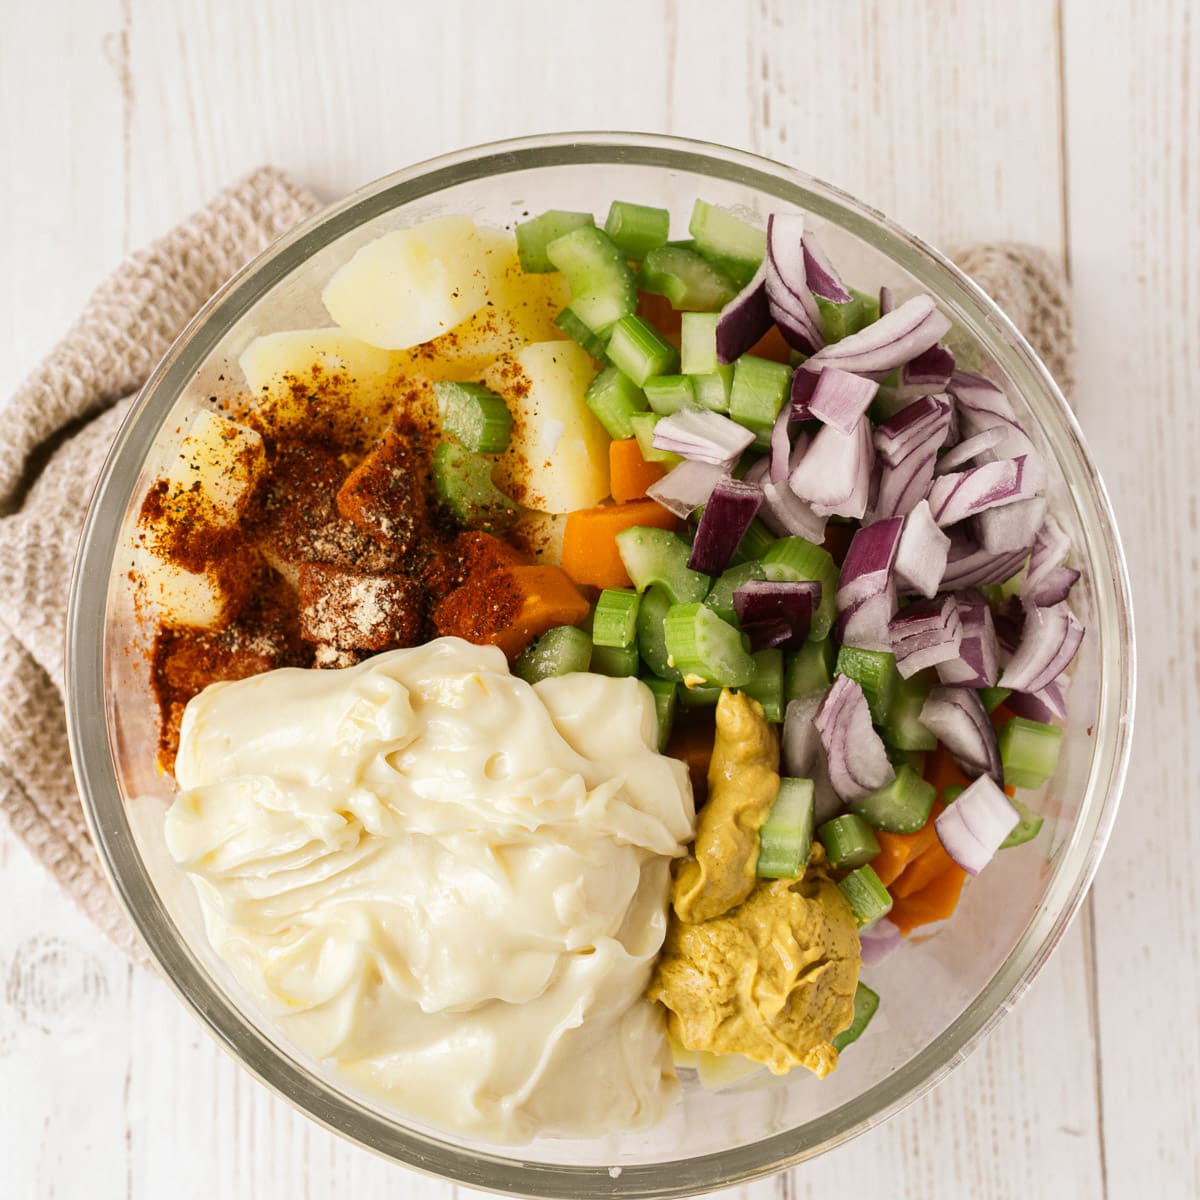 ingredients for vegan potato salad in bowl together